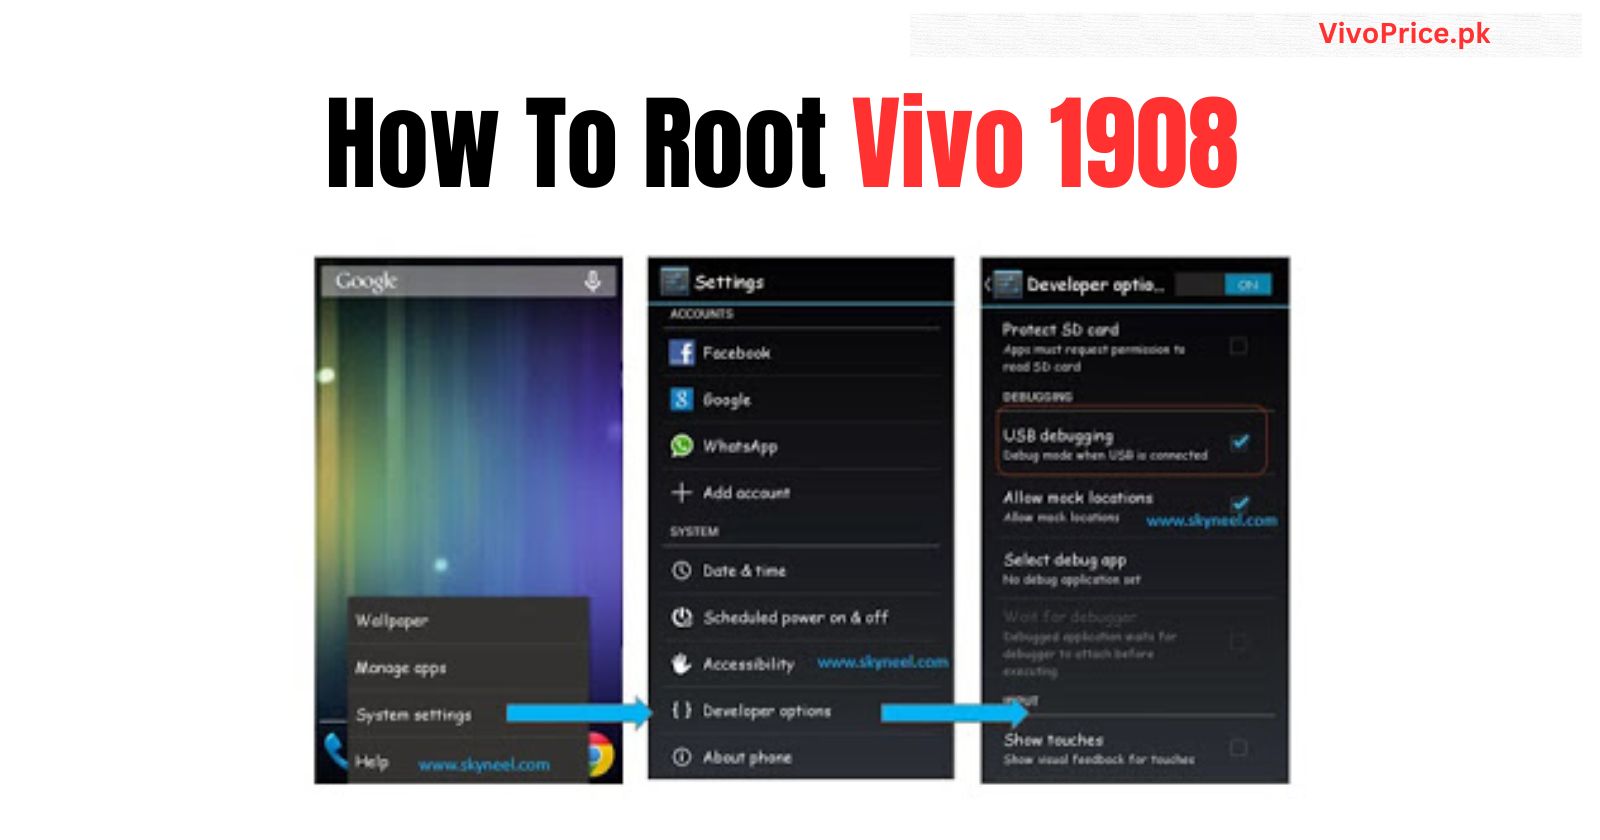 How To Root Vivo 1908 | VivoPrice.pk